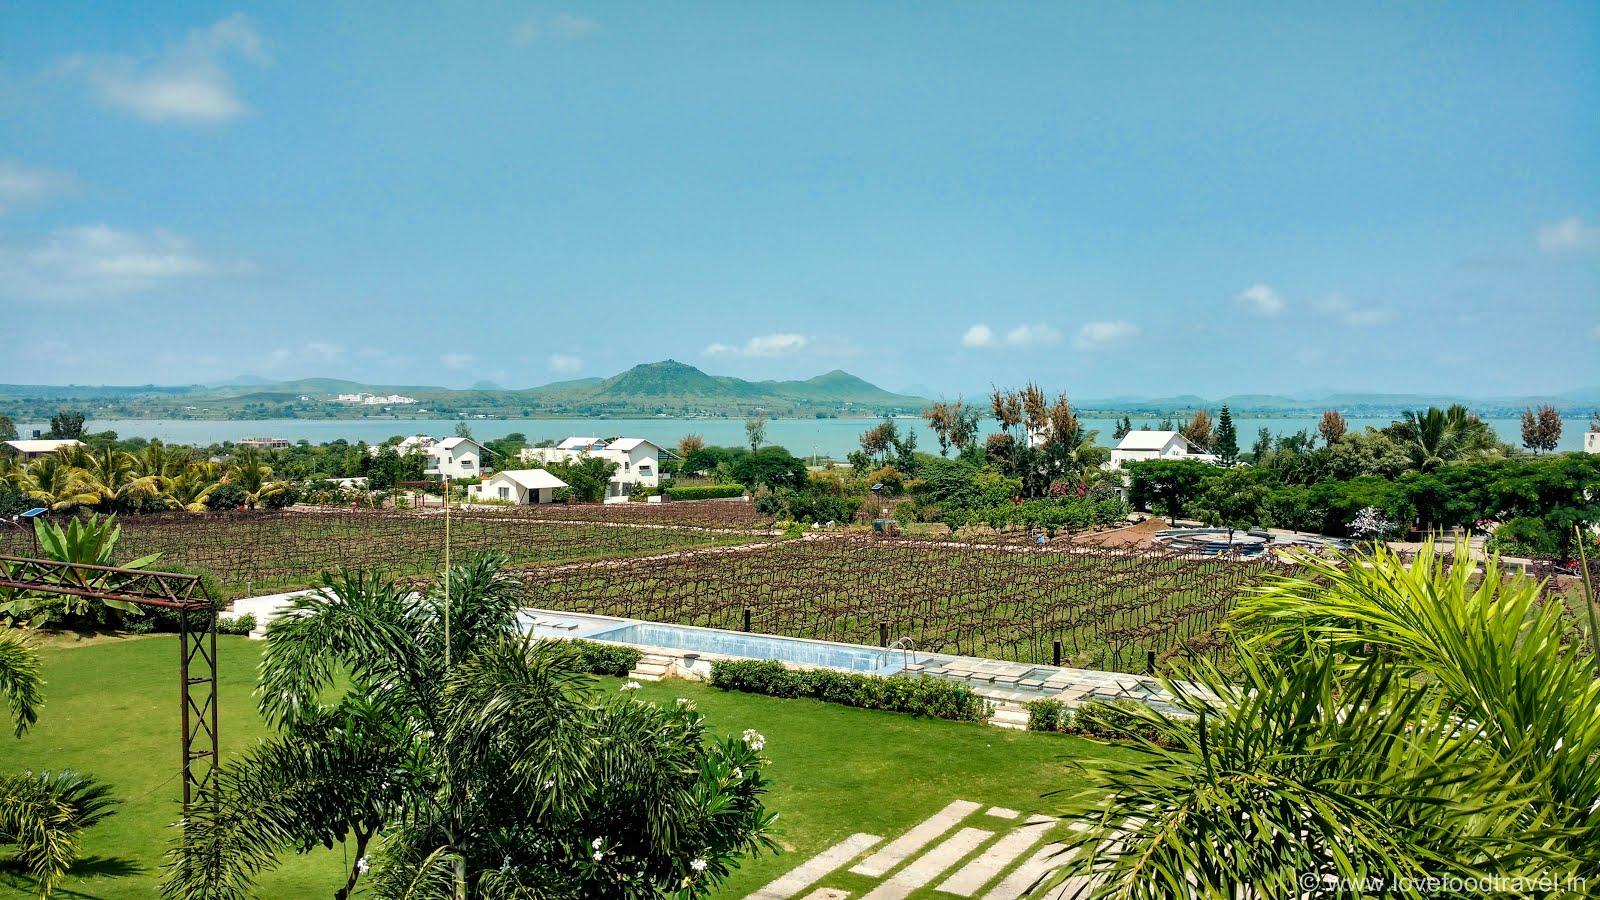 Visit Sula vineyards & stay at relaxing Soma resort